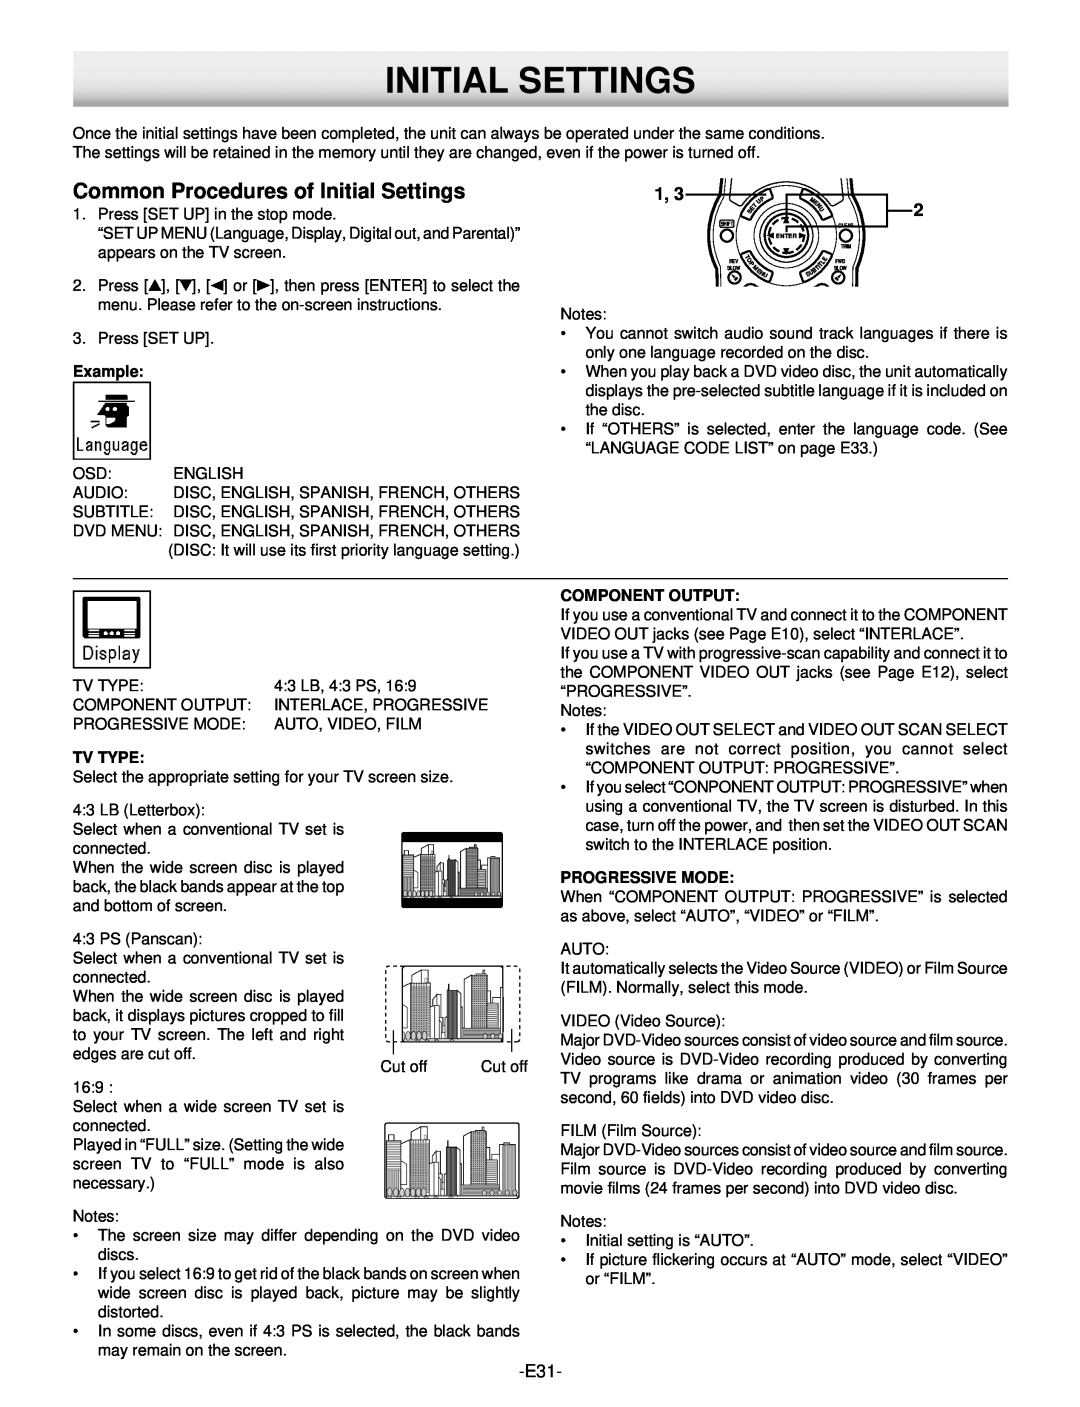 Hitachi DV-S522U instruction manual Common Procedures of Initial Settings, Tv Type, Component Output, Progressive Mode 